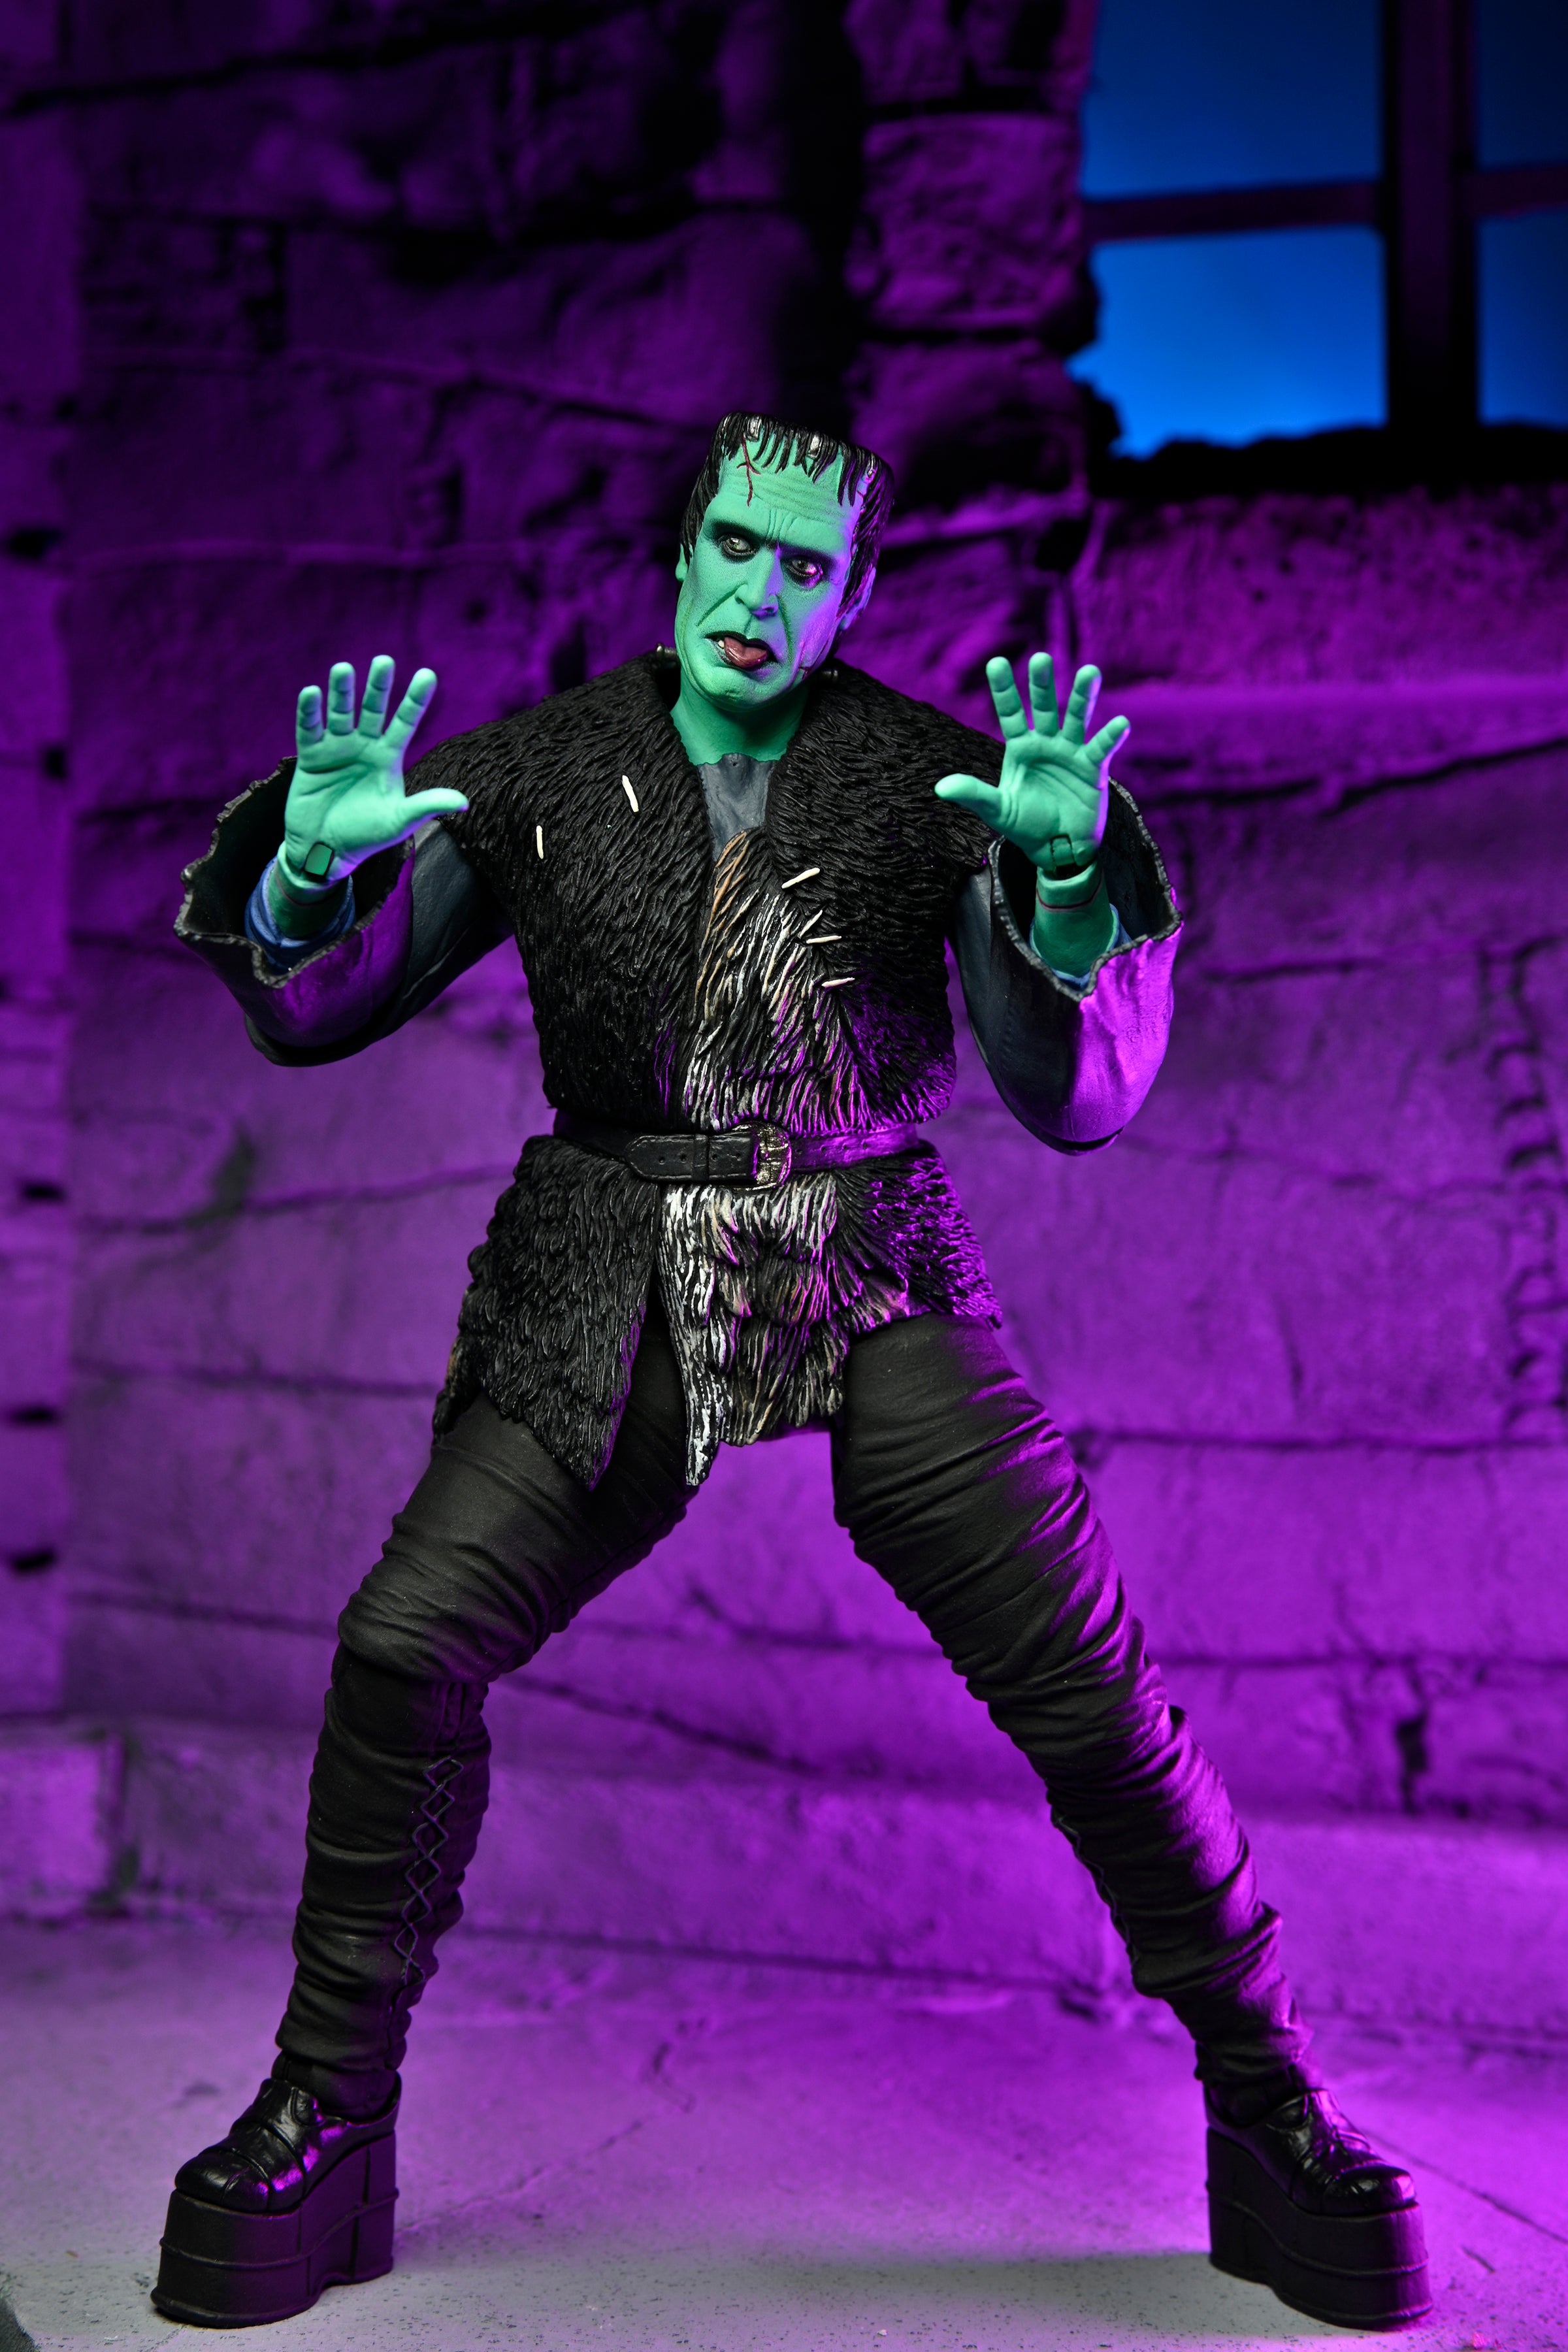 NECA Figura de Accion Ultimate: Rob Zombies The Munsters - Herman Munster 7 Pulgadas